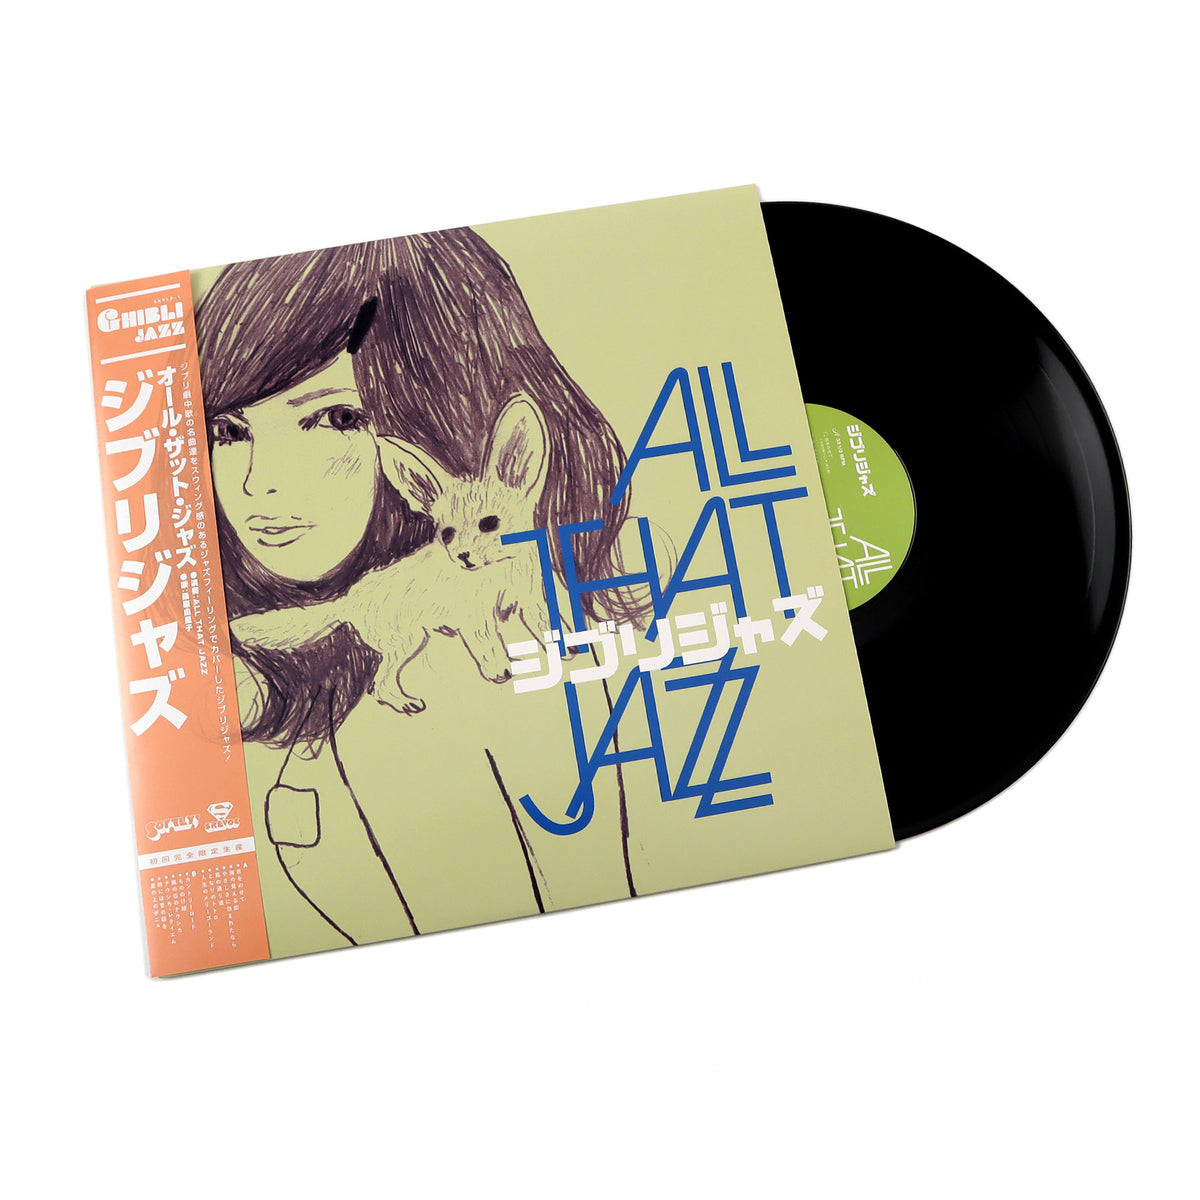 Ghibli Jazz 1 / ALL THAT JAZZ (Vinyl)